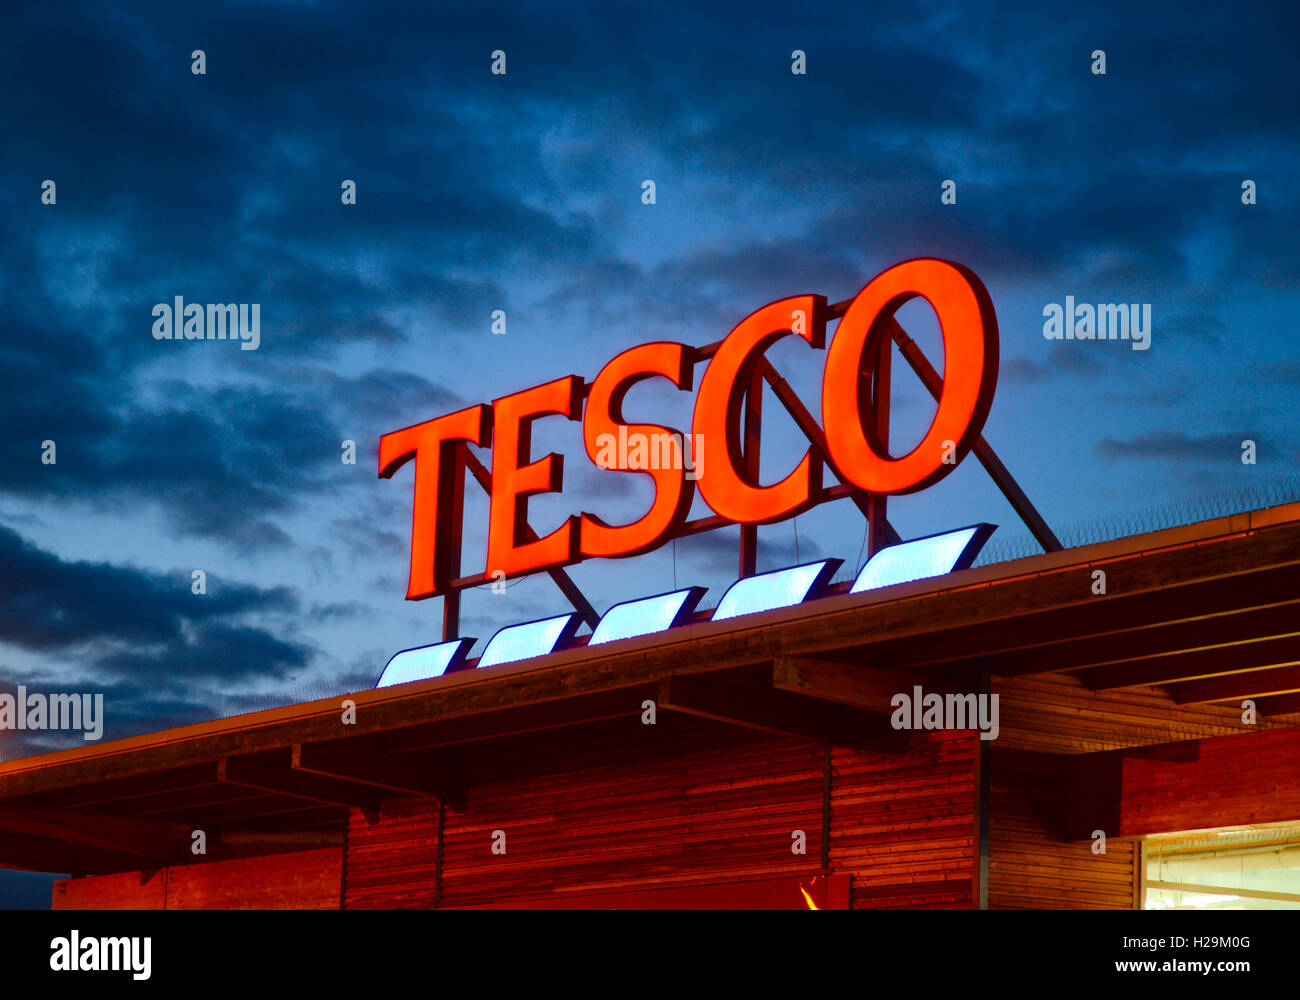 Tesco sign at night. Stock Photo